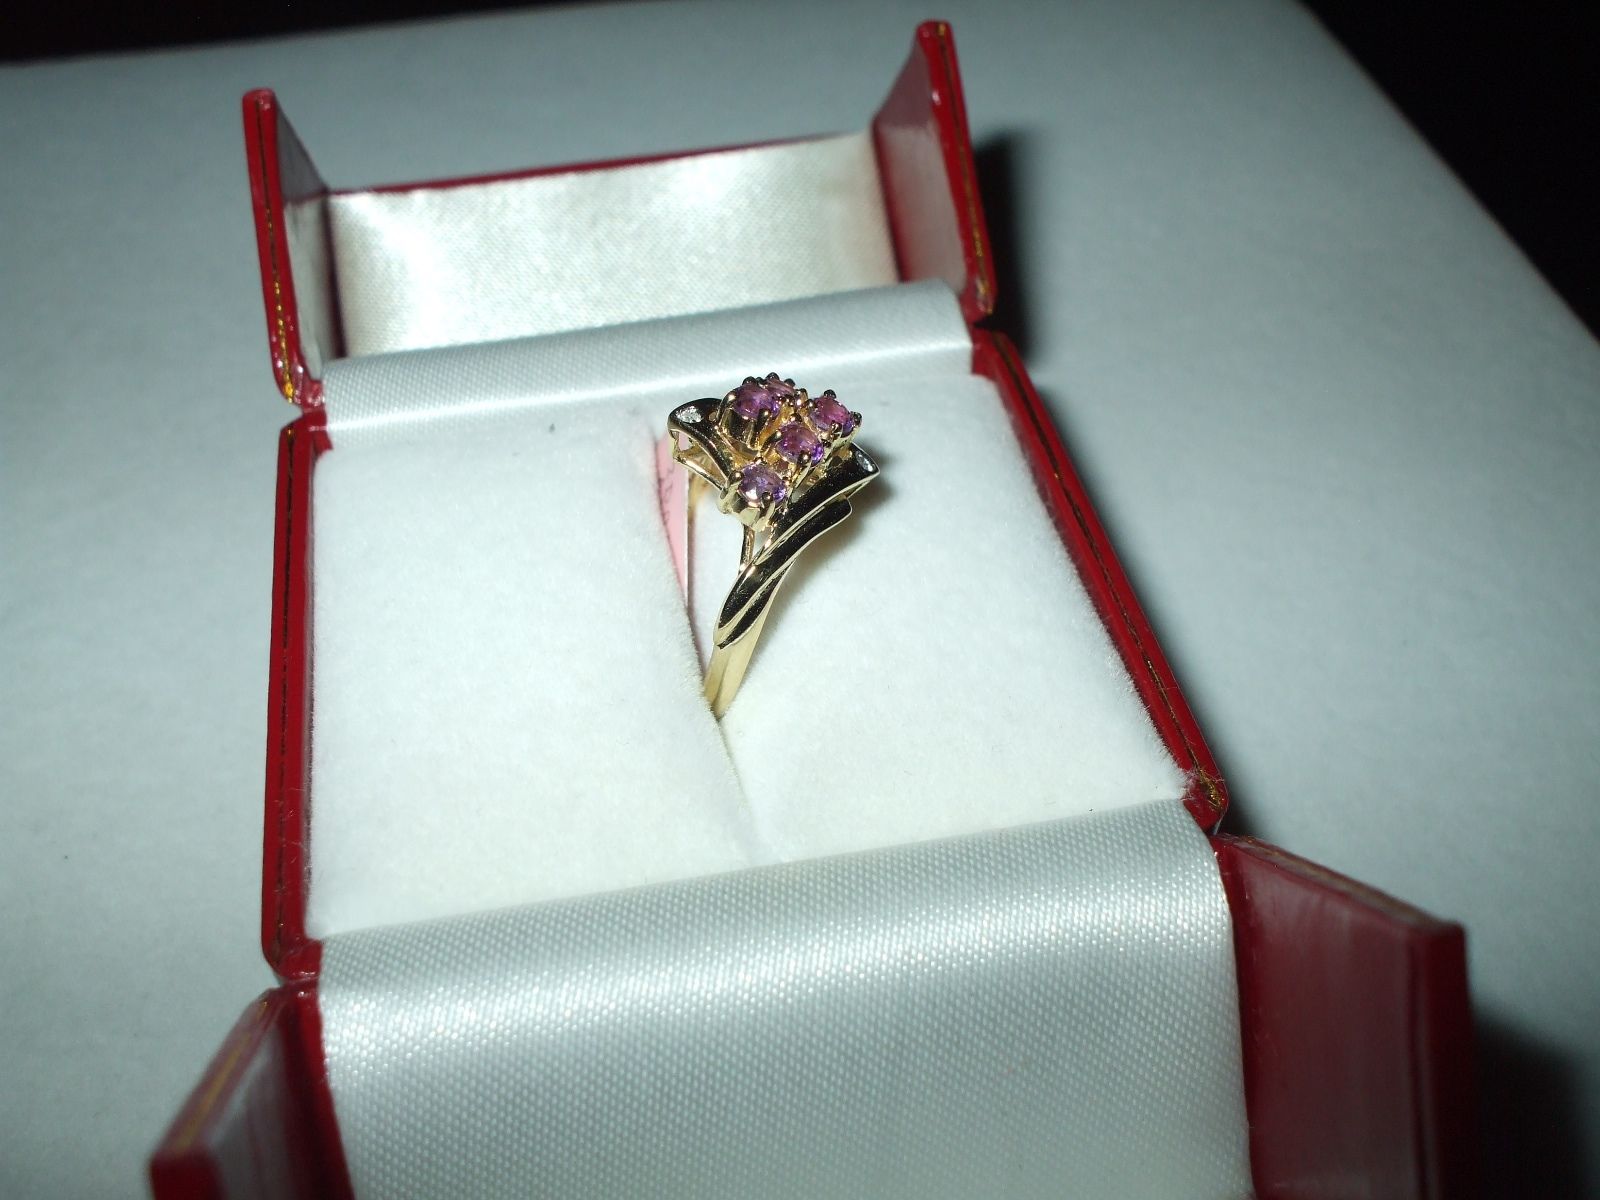 Genuine 1.20 ct Amethyst and Diamond Ring 14K yellow gold NWT $800